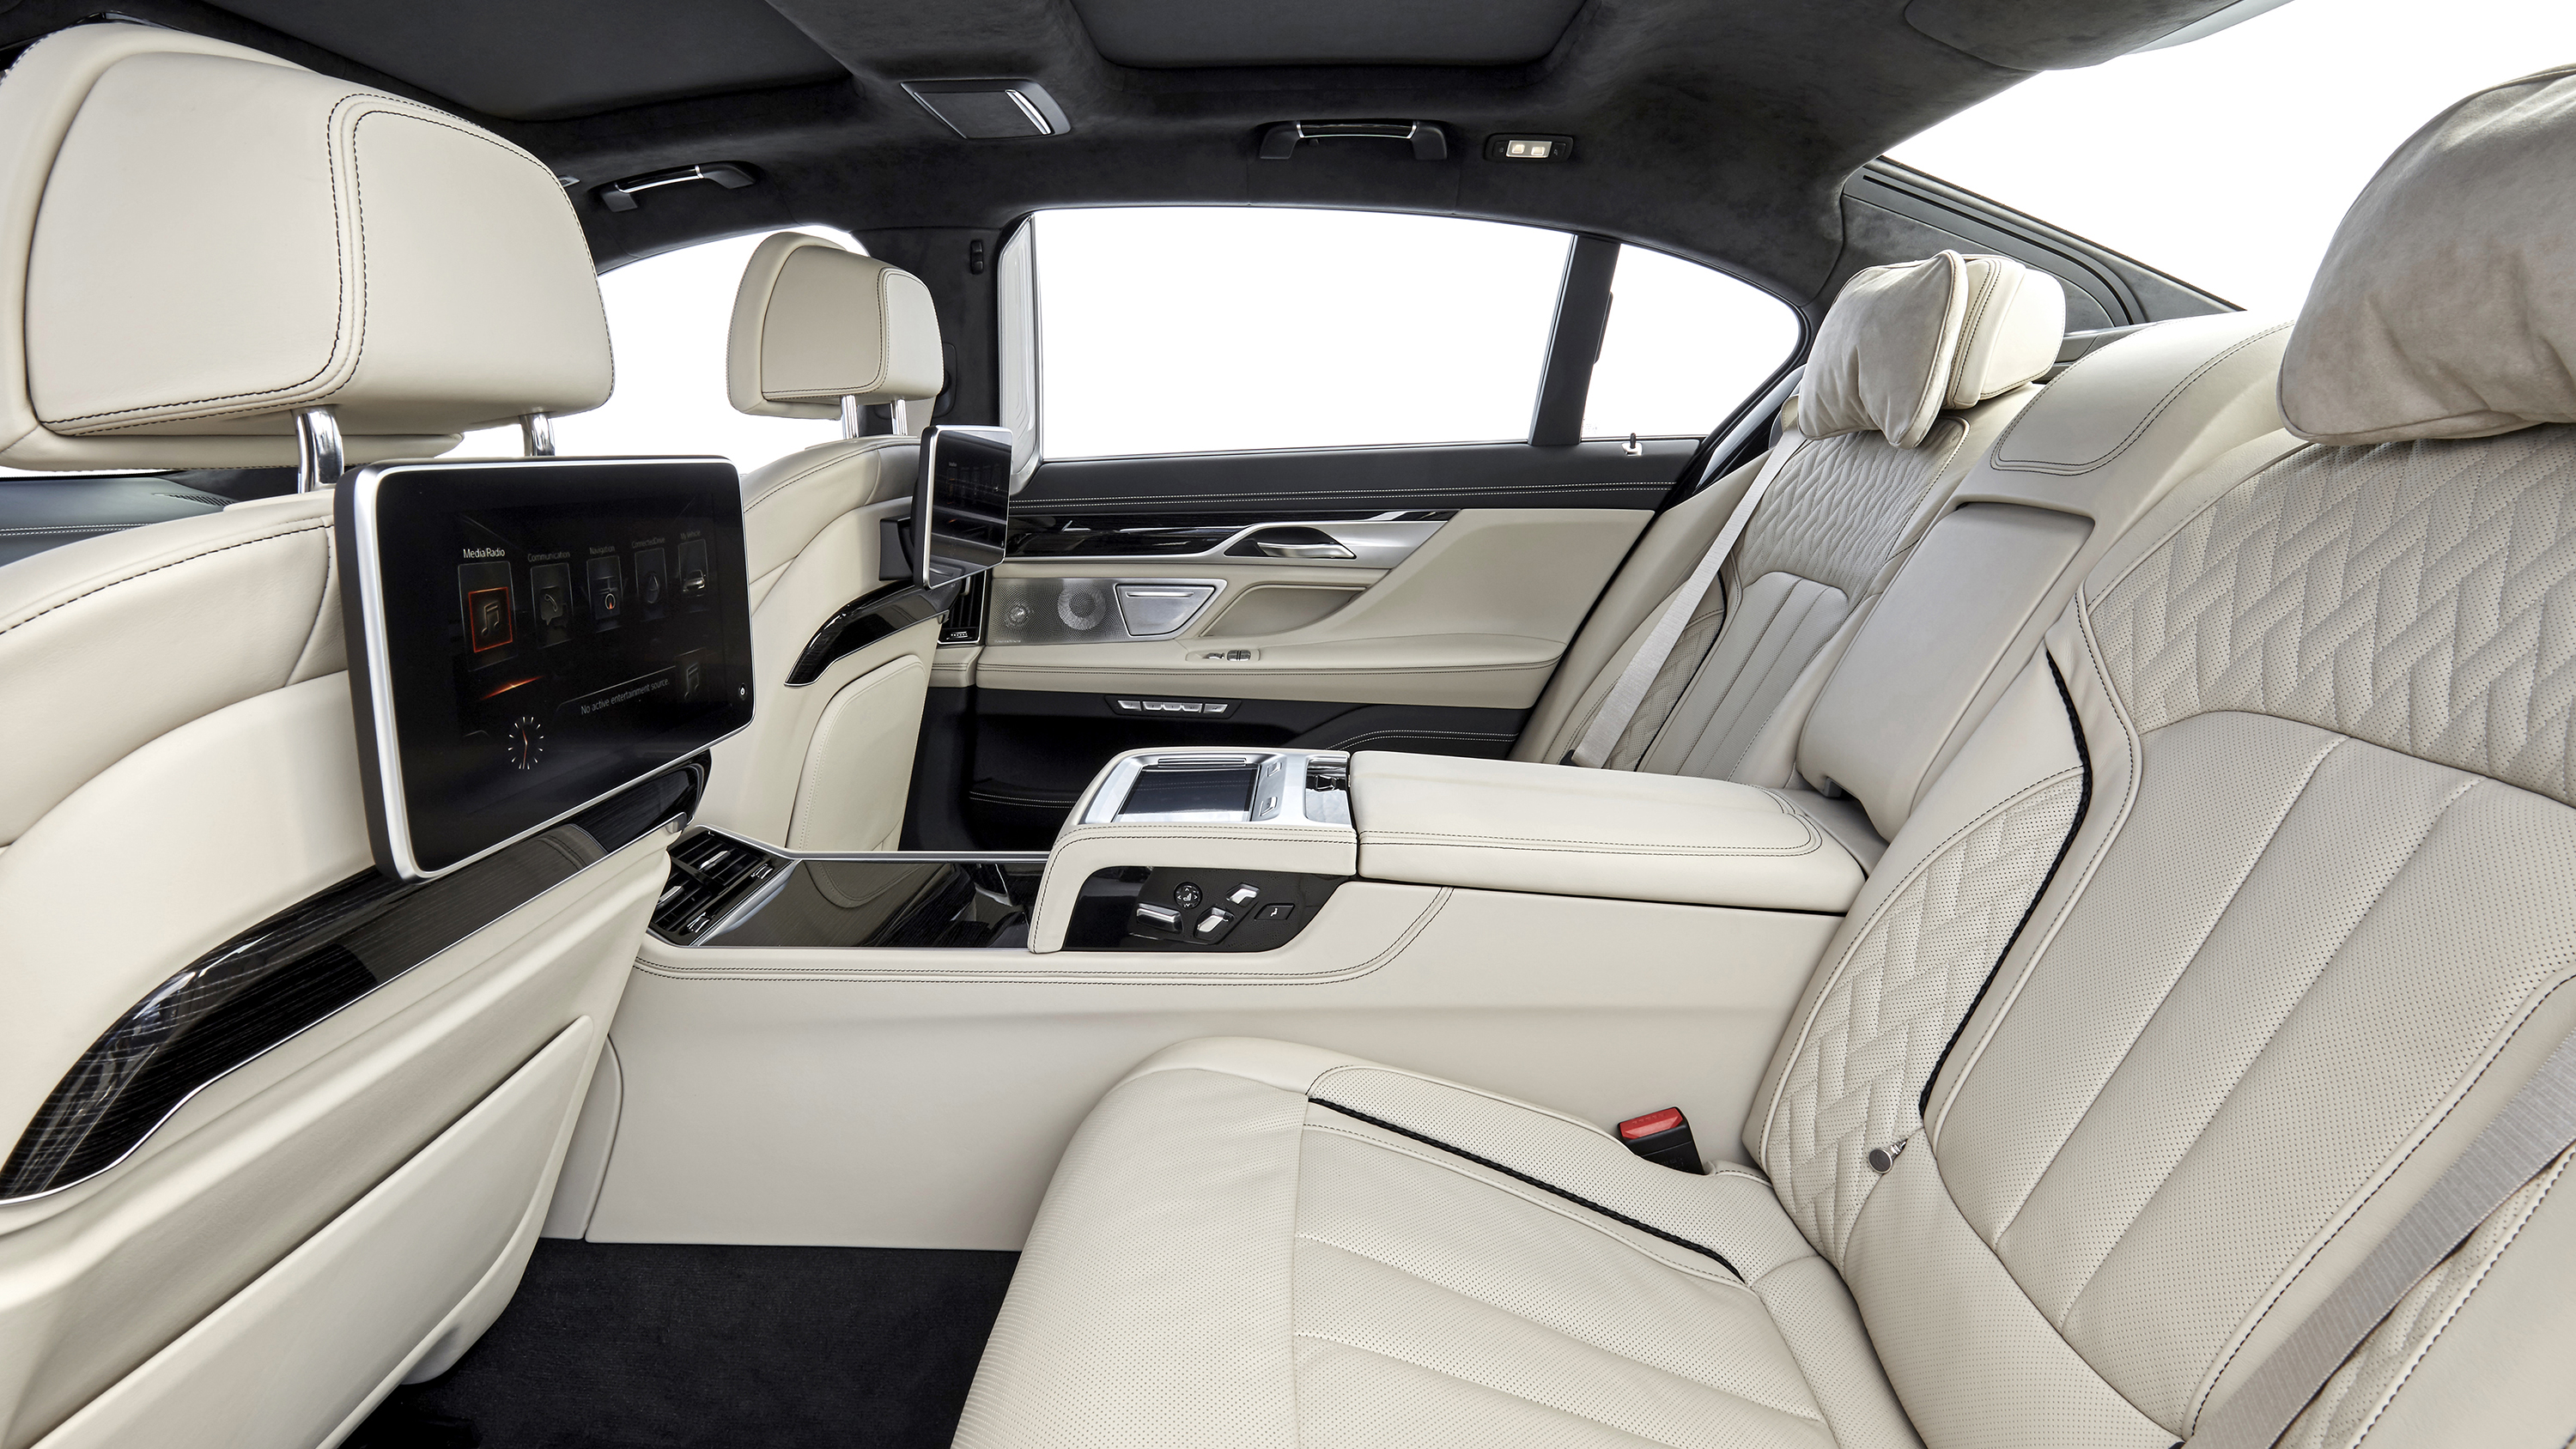 BMW M760Li interior - Seats